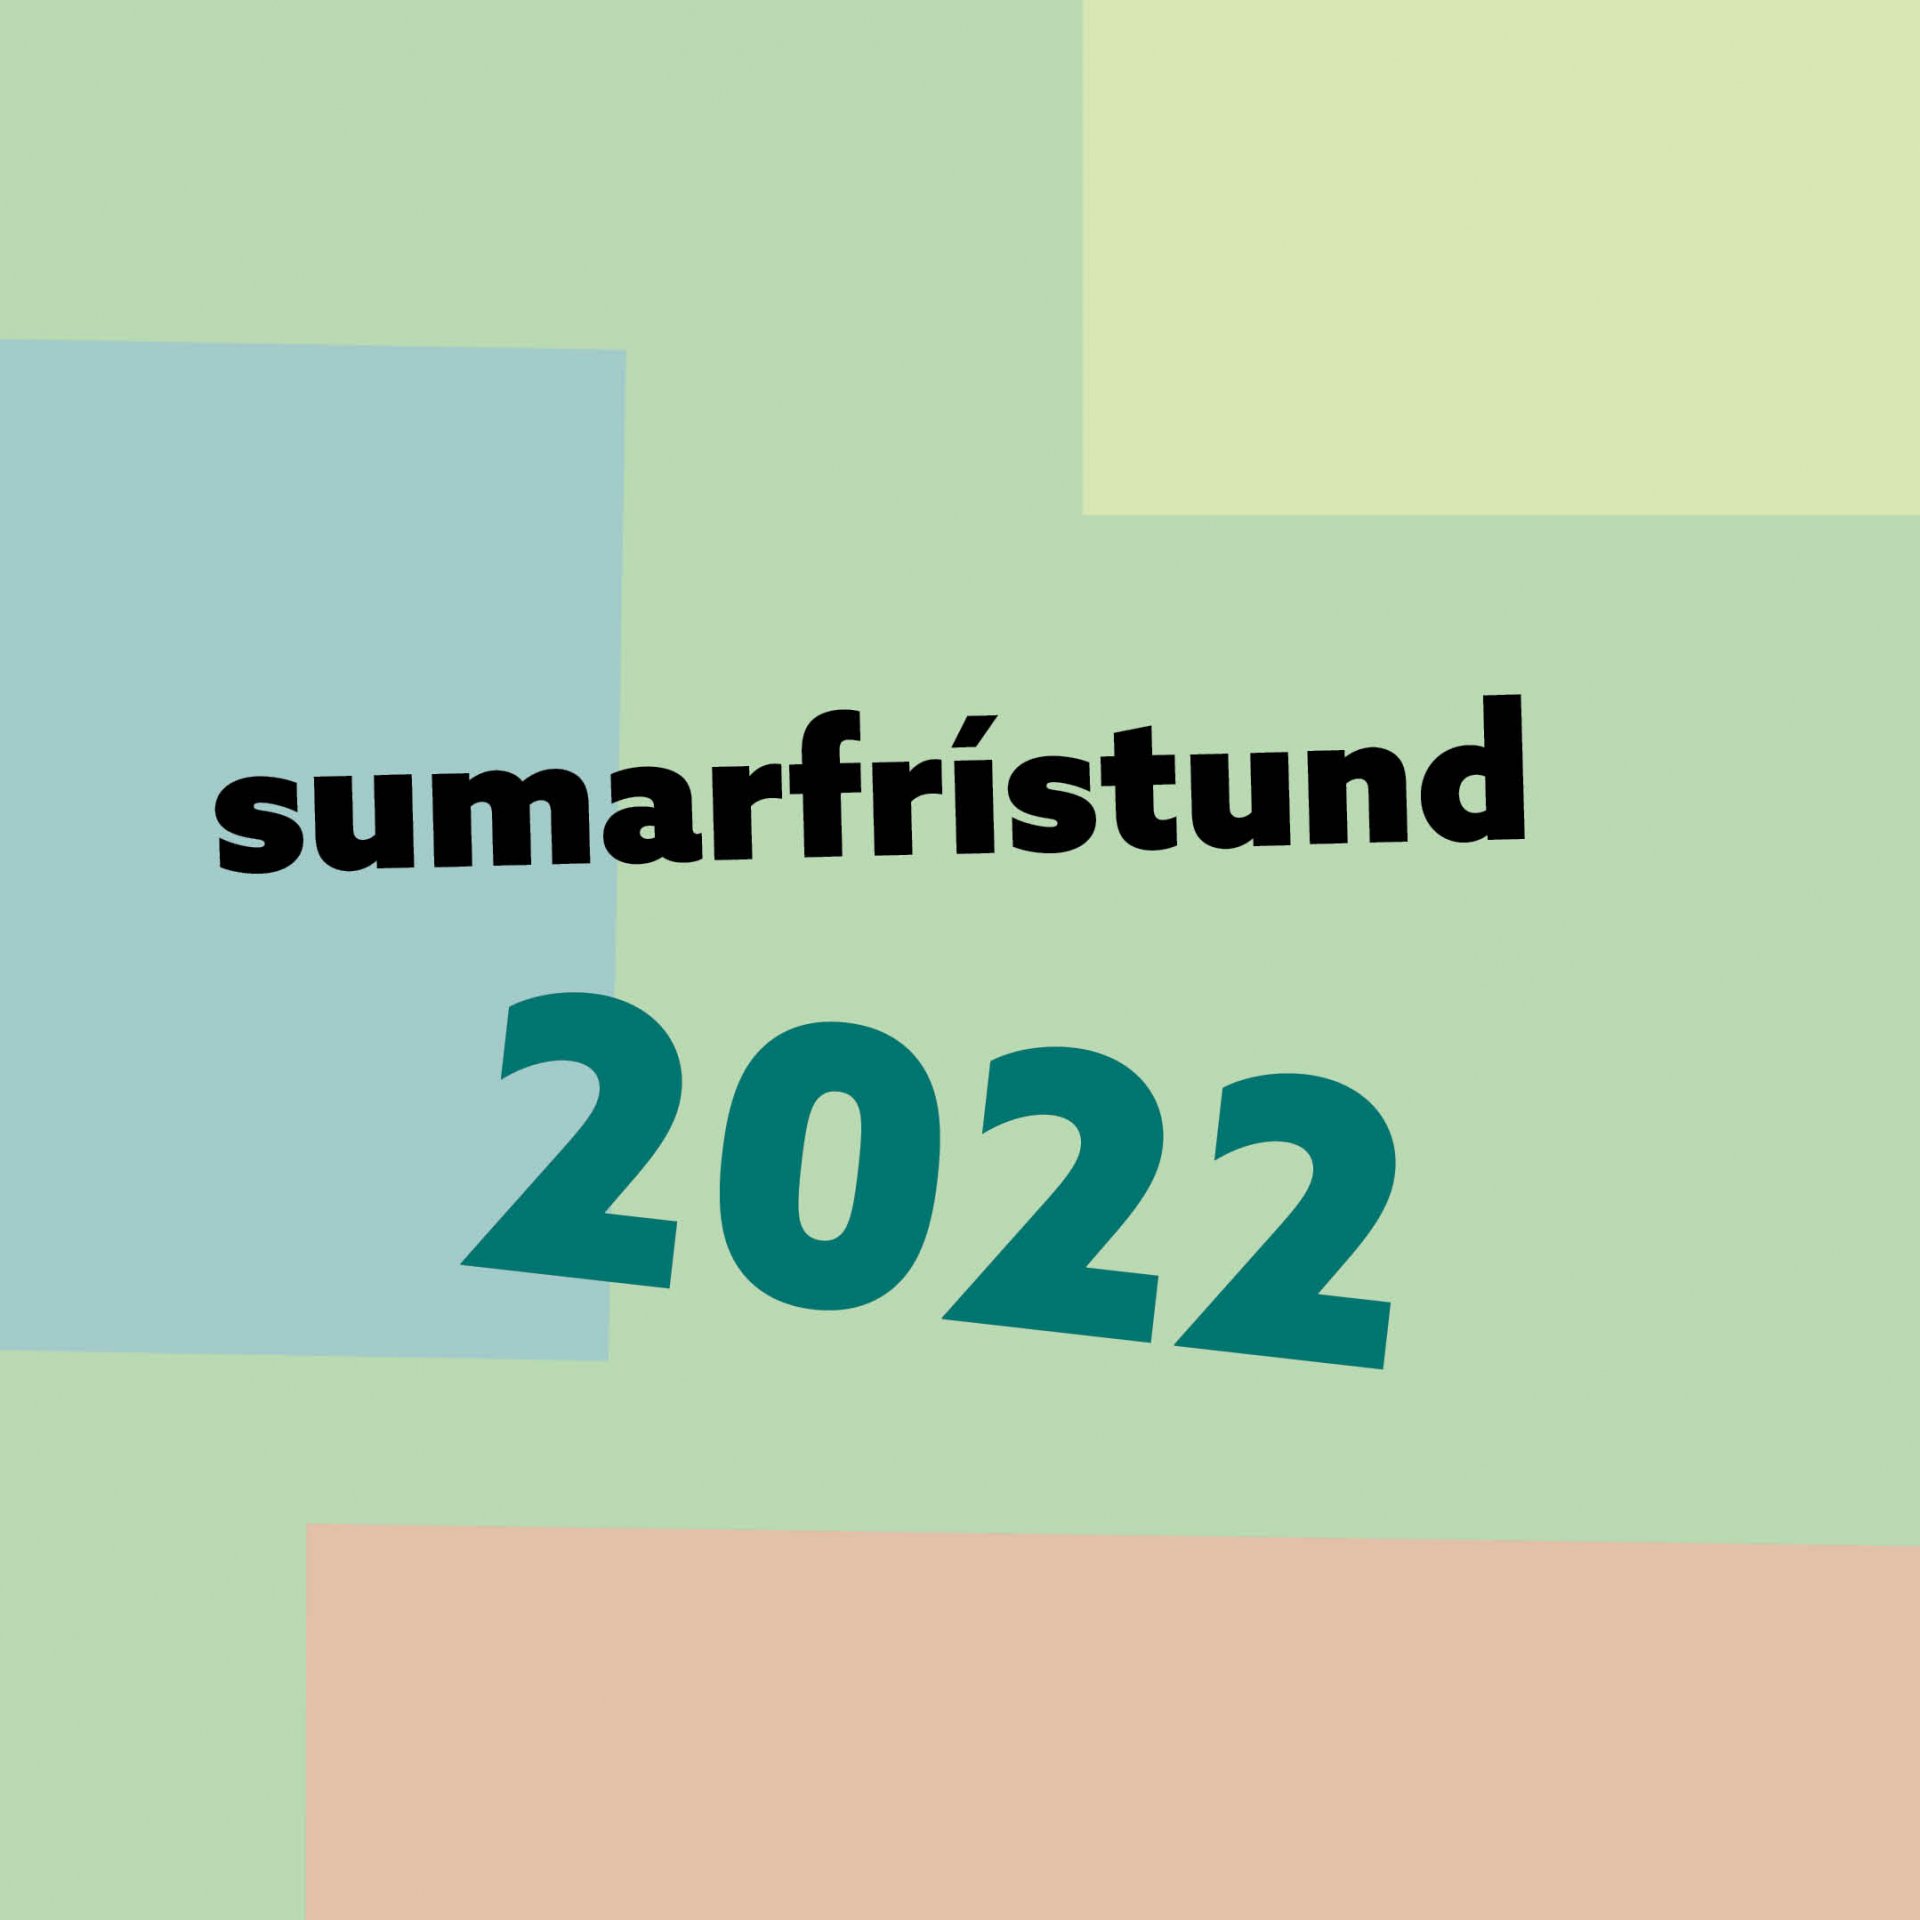 Sumarfrístund 2022